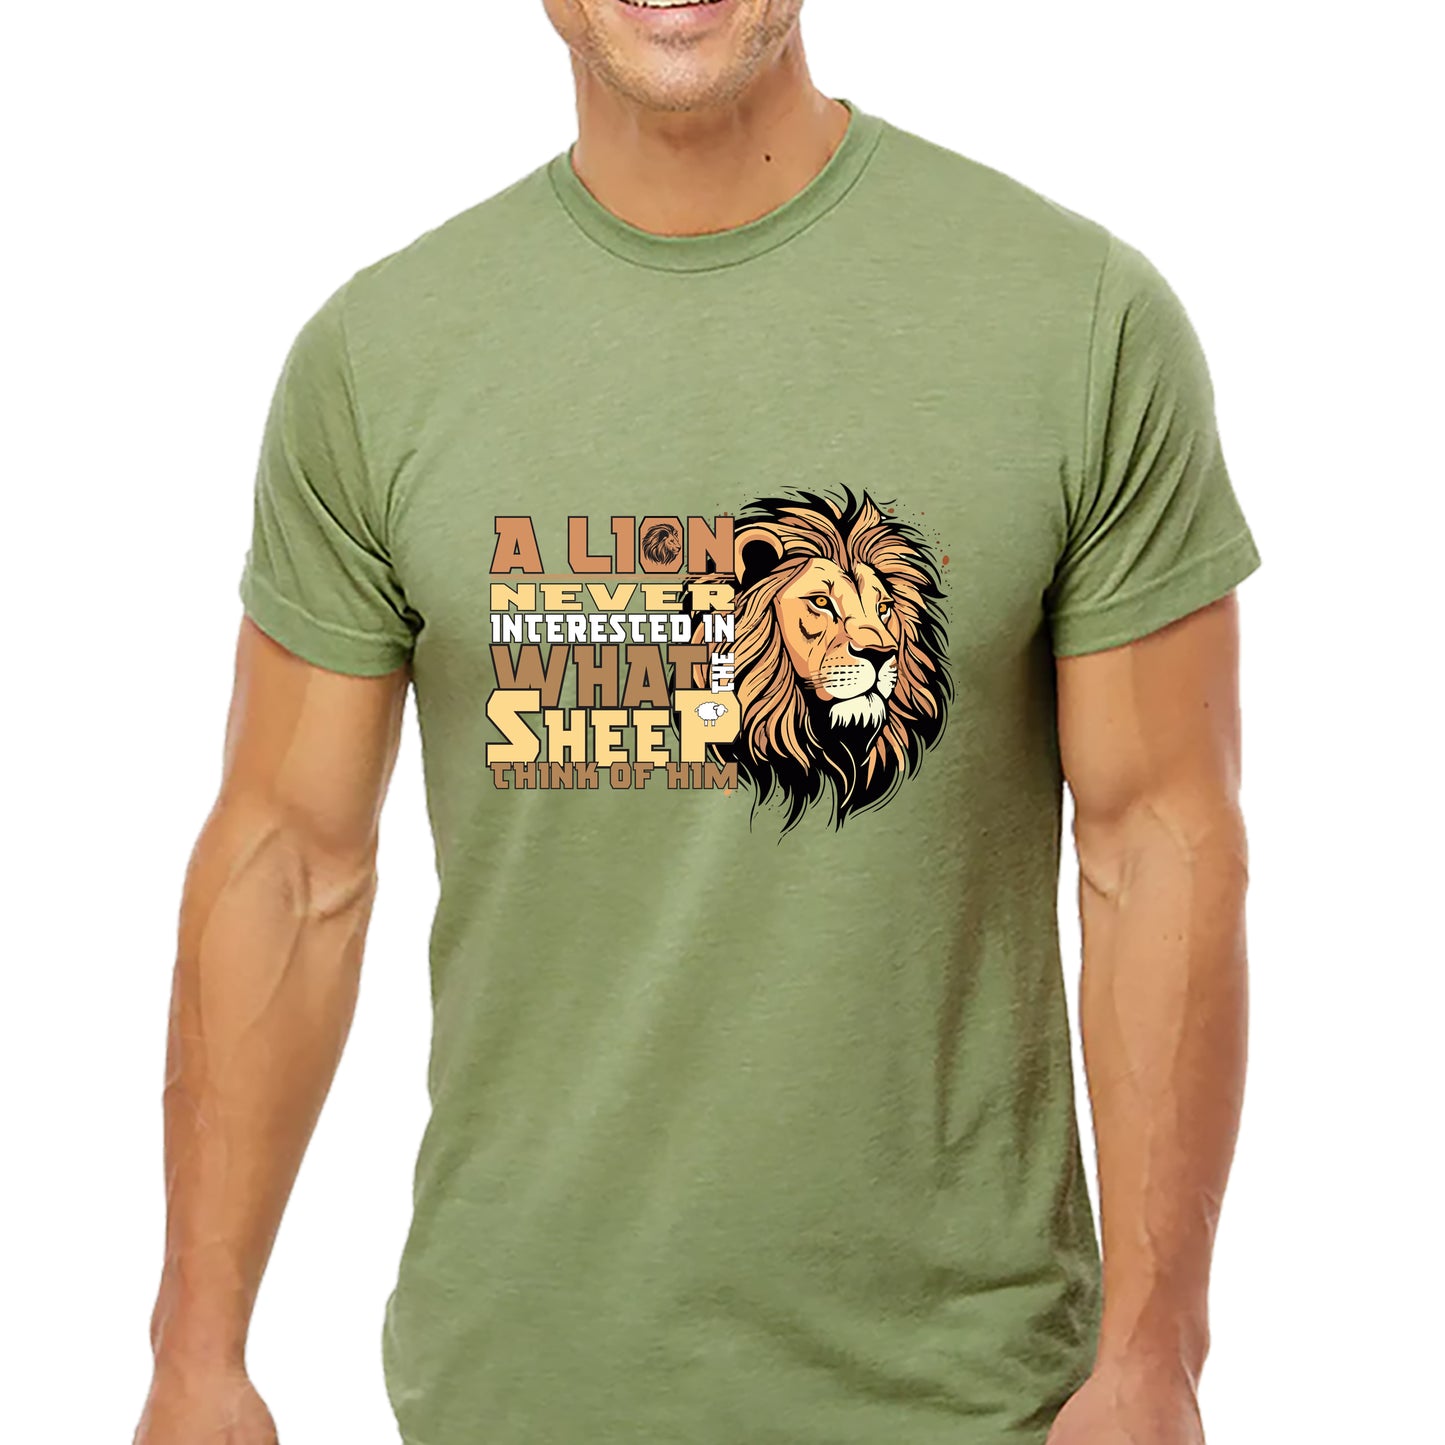 A Lion Never Interested T-shirt